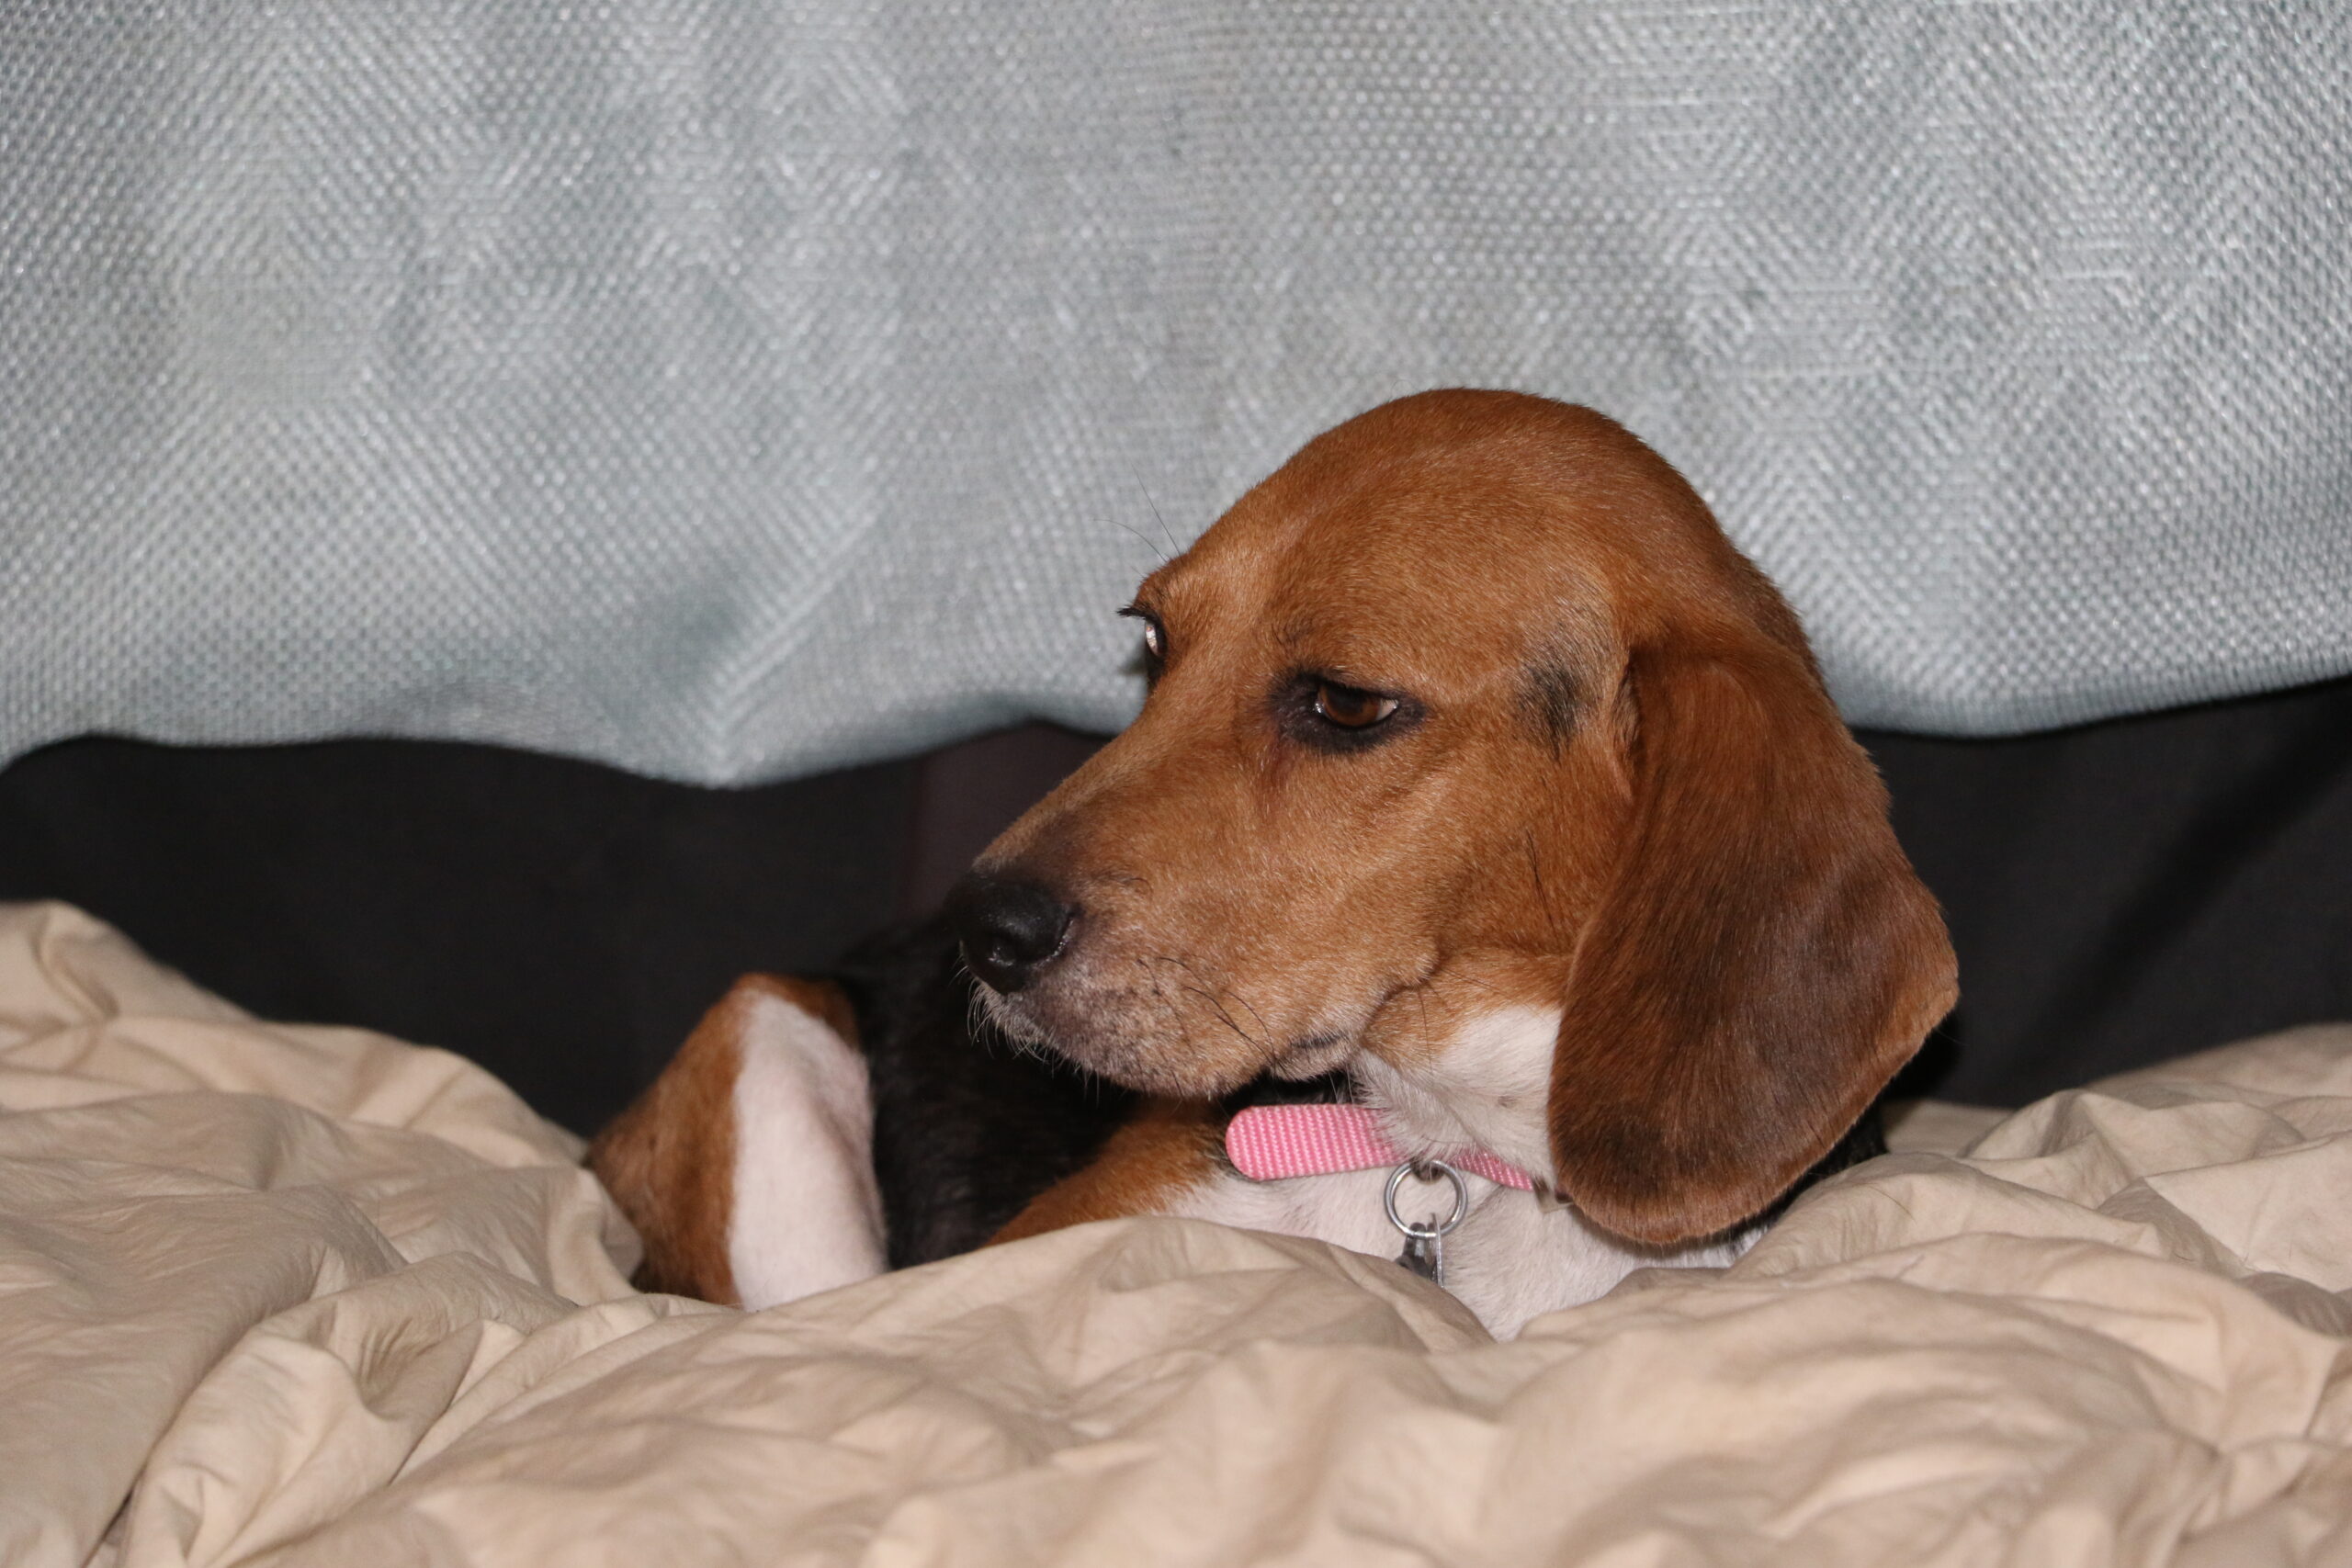 Jellybean: Mini Beagle (rescued pregnant)